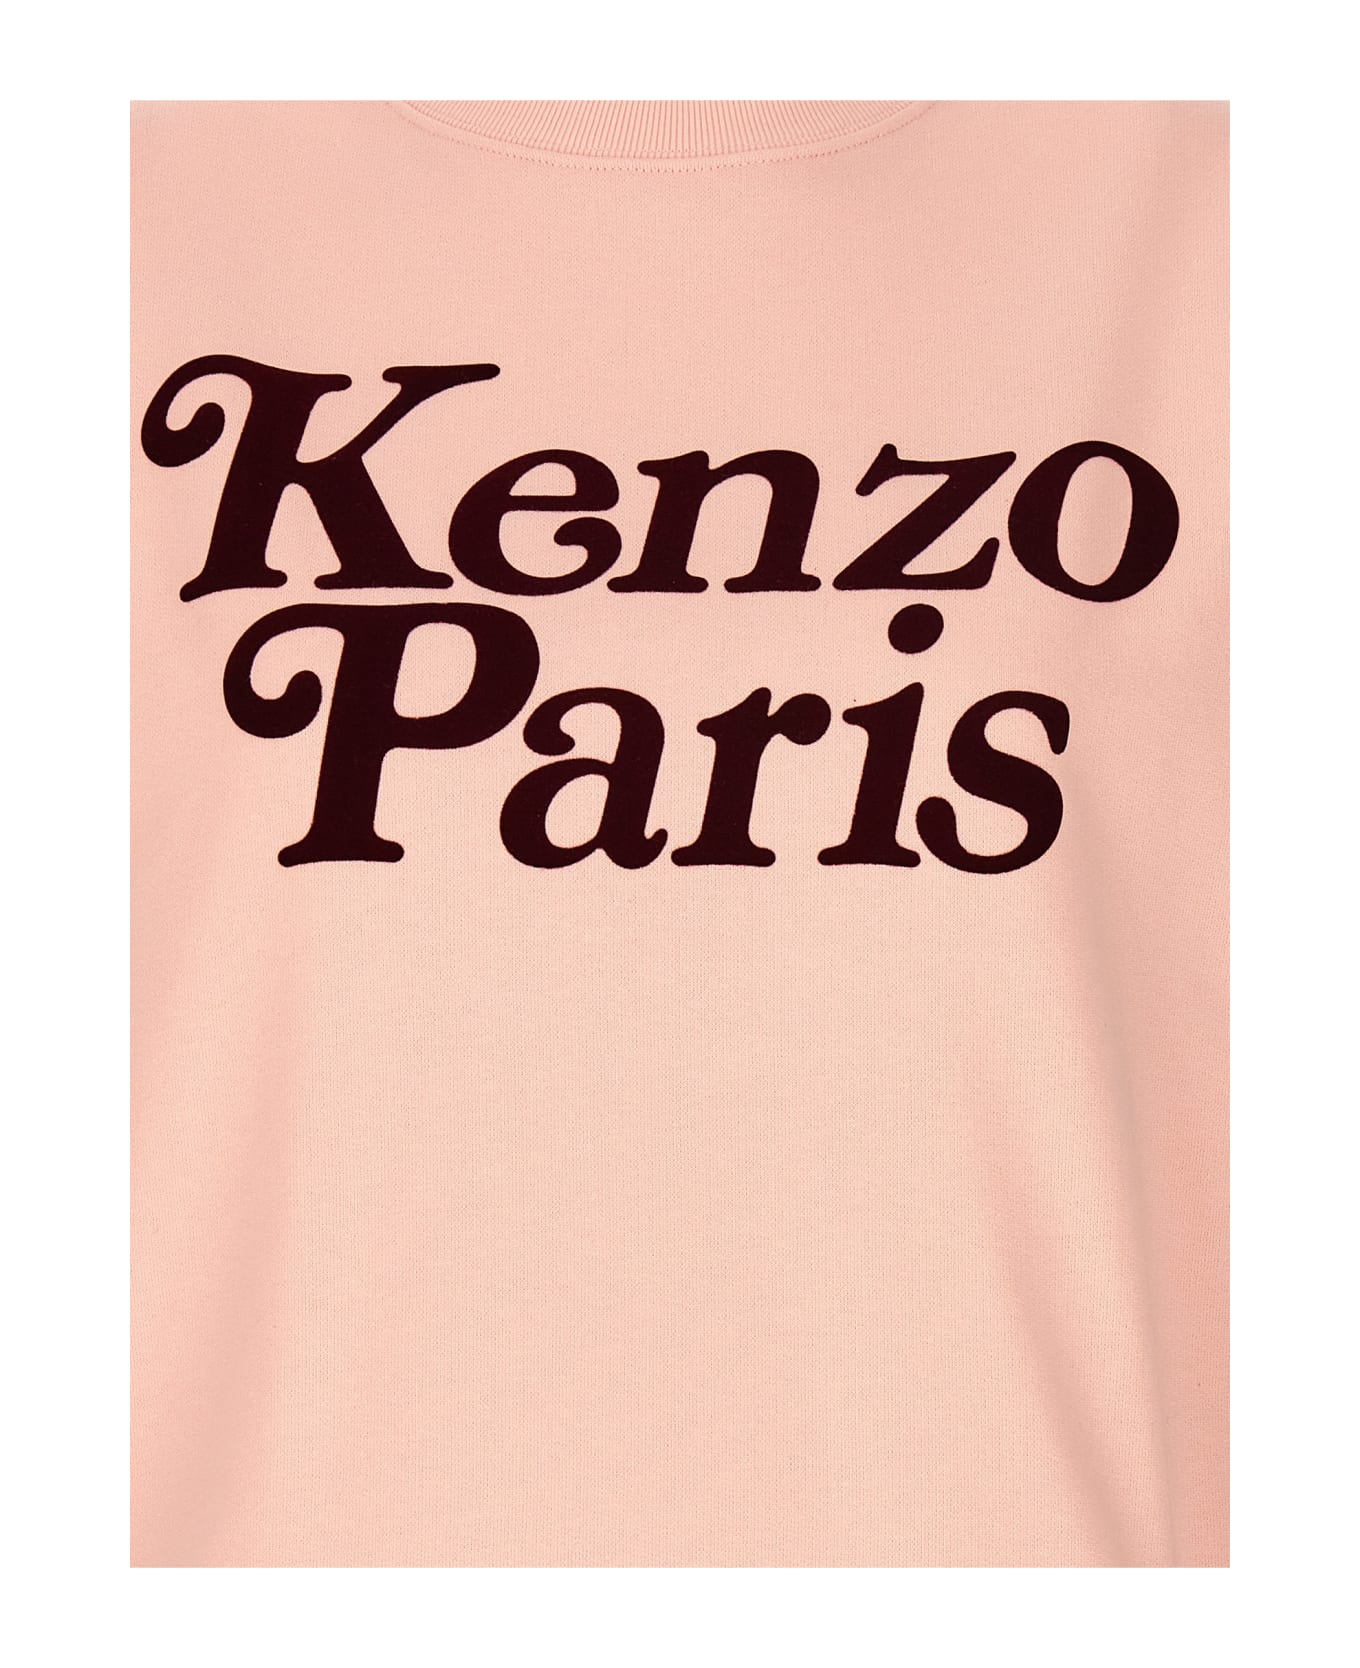 Kenzo Verdy Regular Sweatshirt - Pink フリース